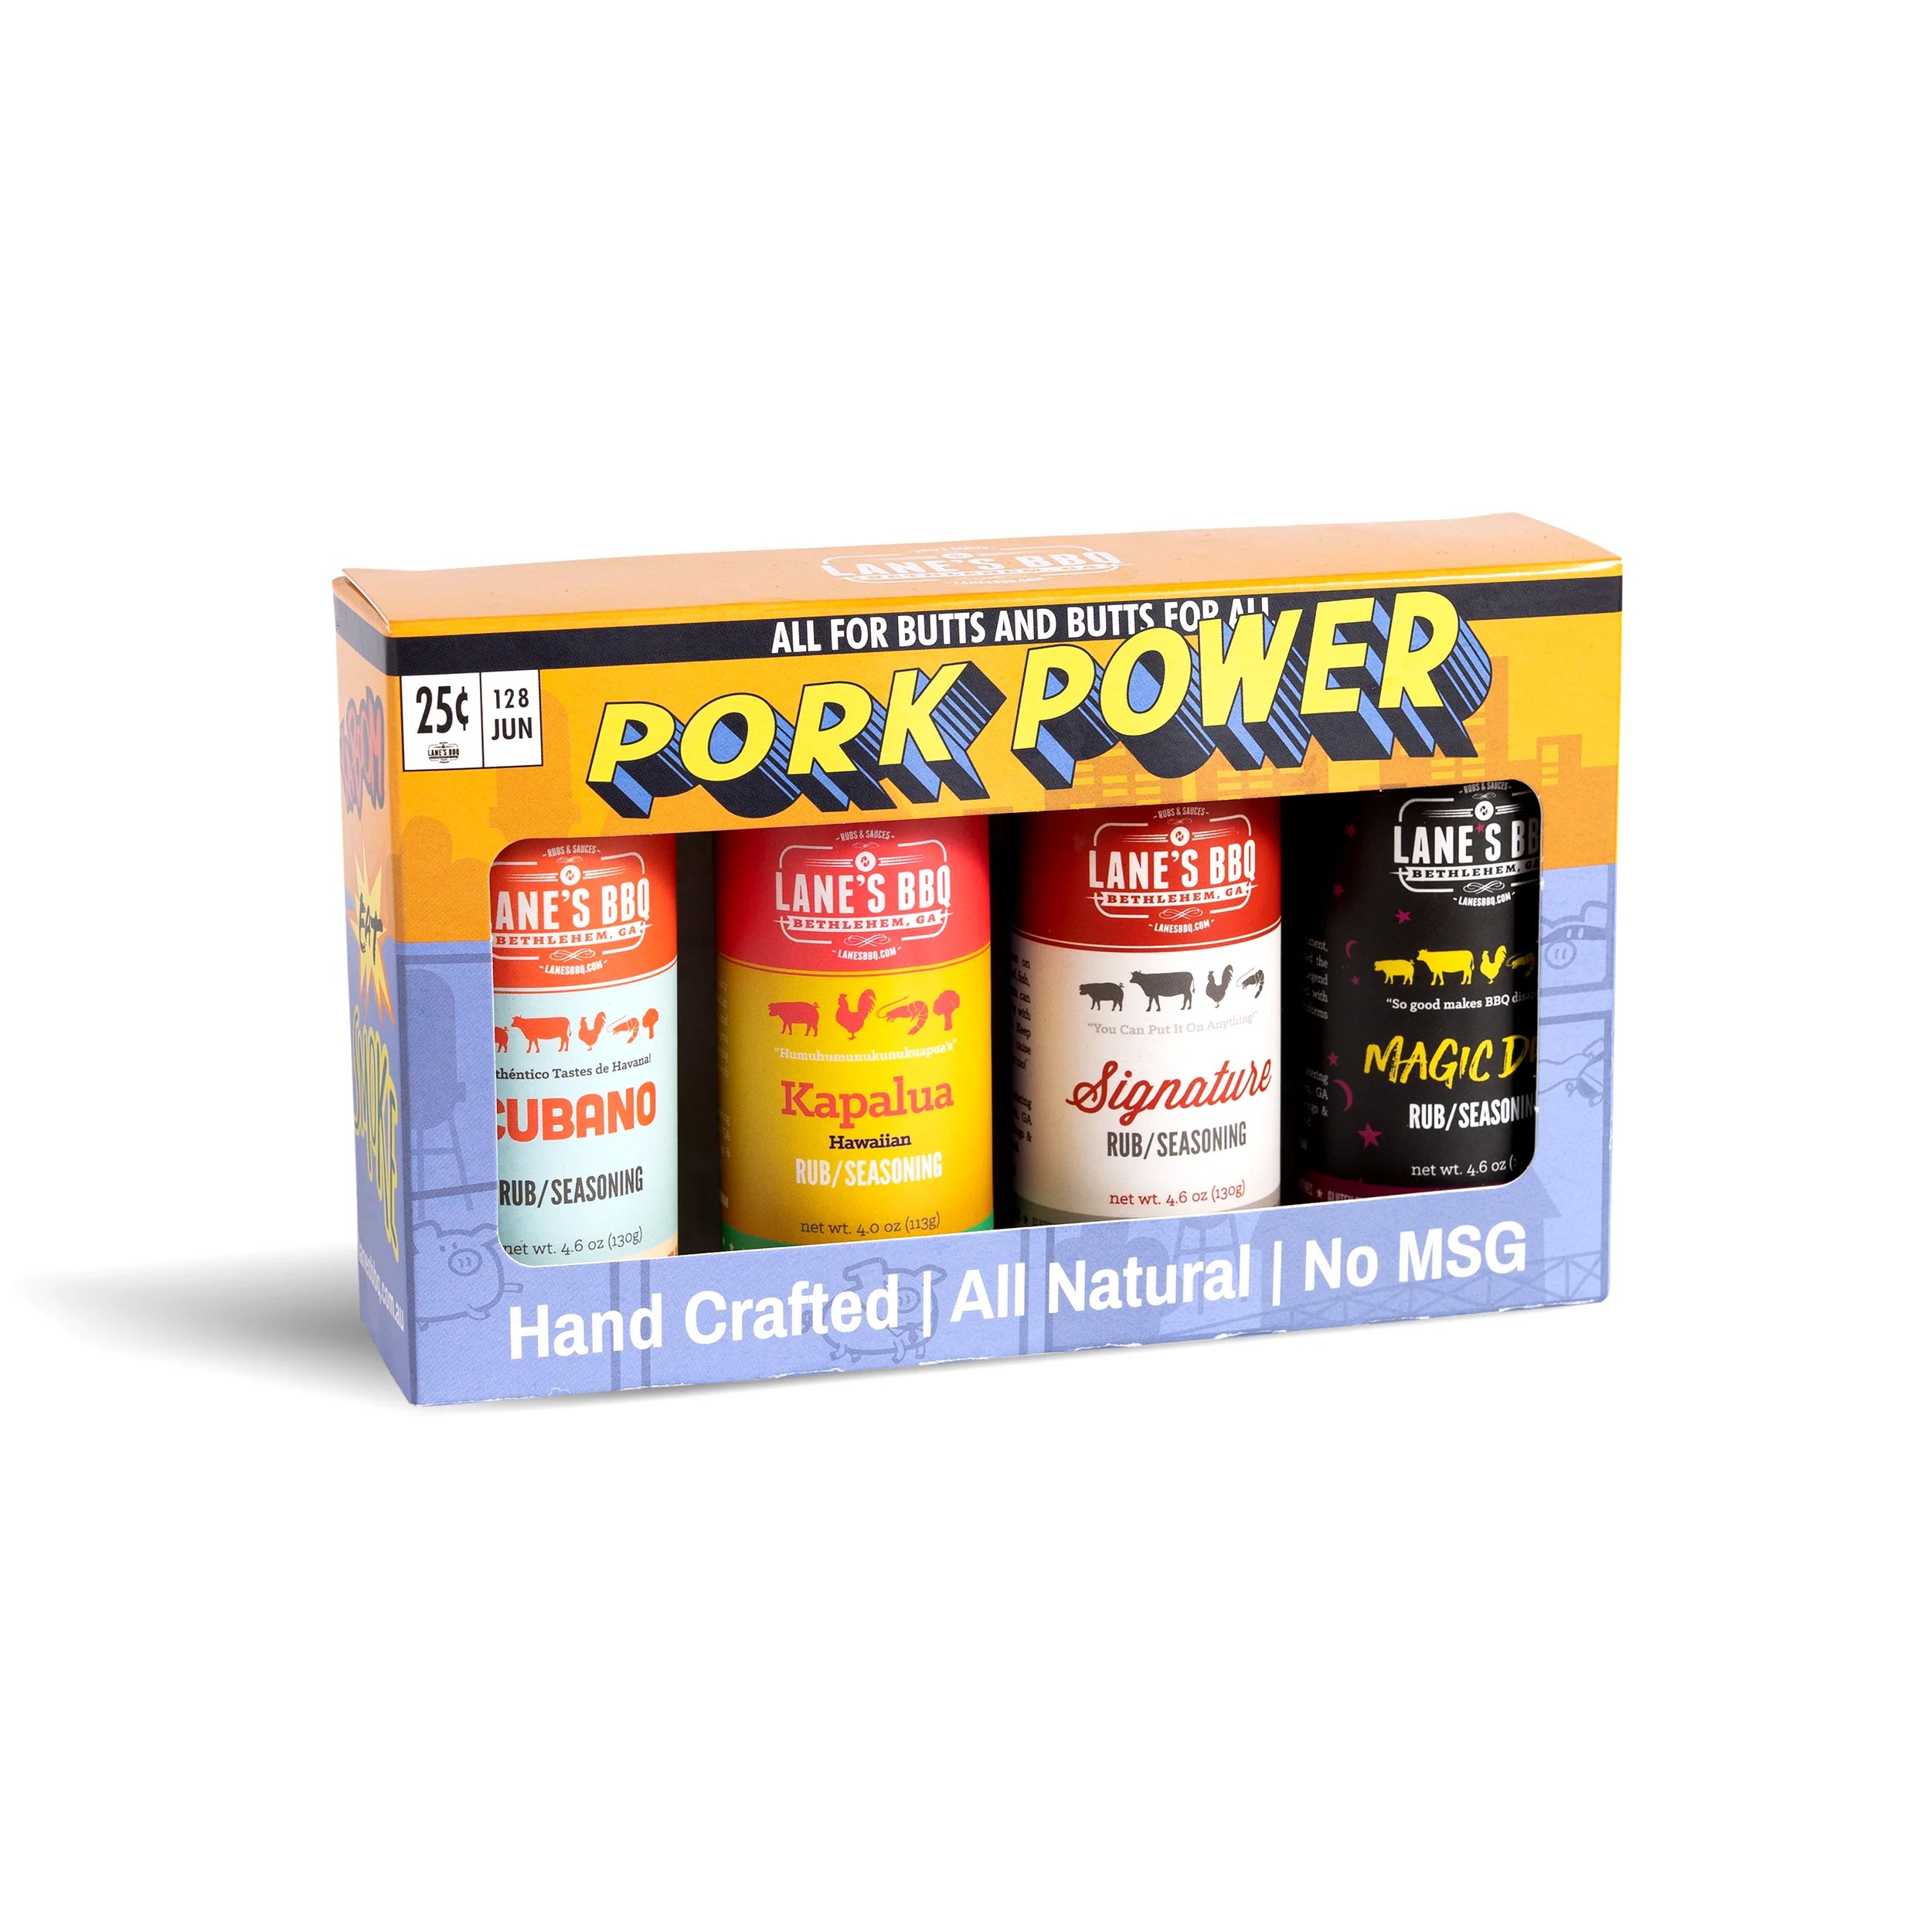 Lane's BBQ Pork Power - 4 Rub Gift Set